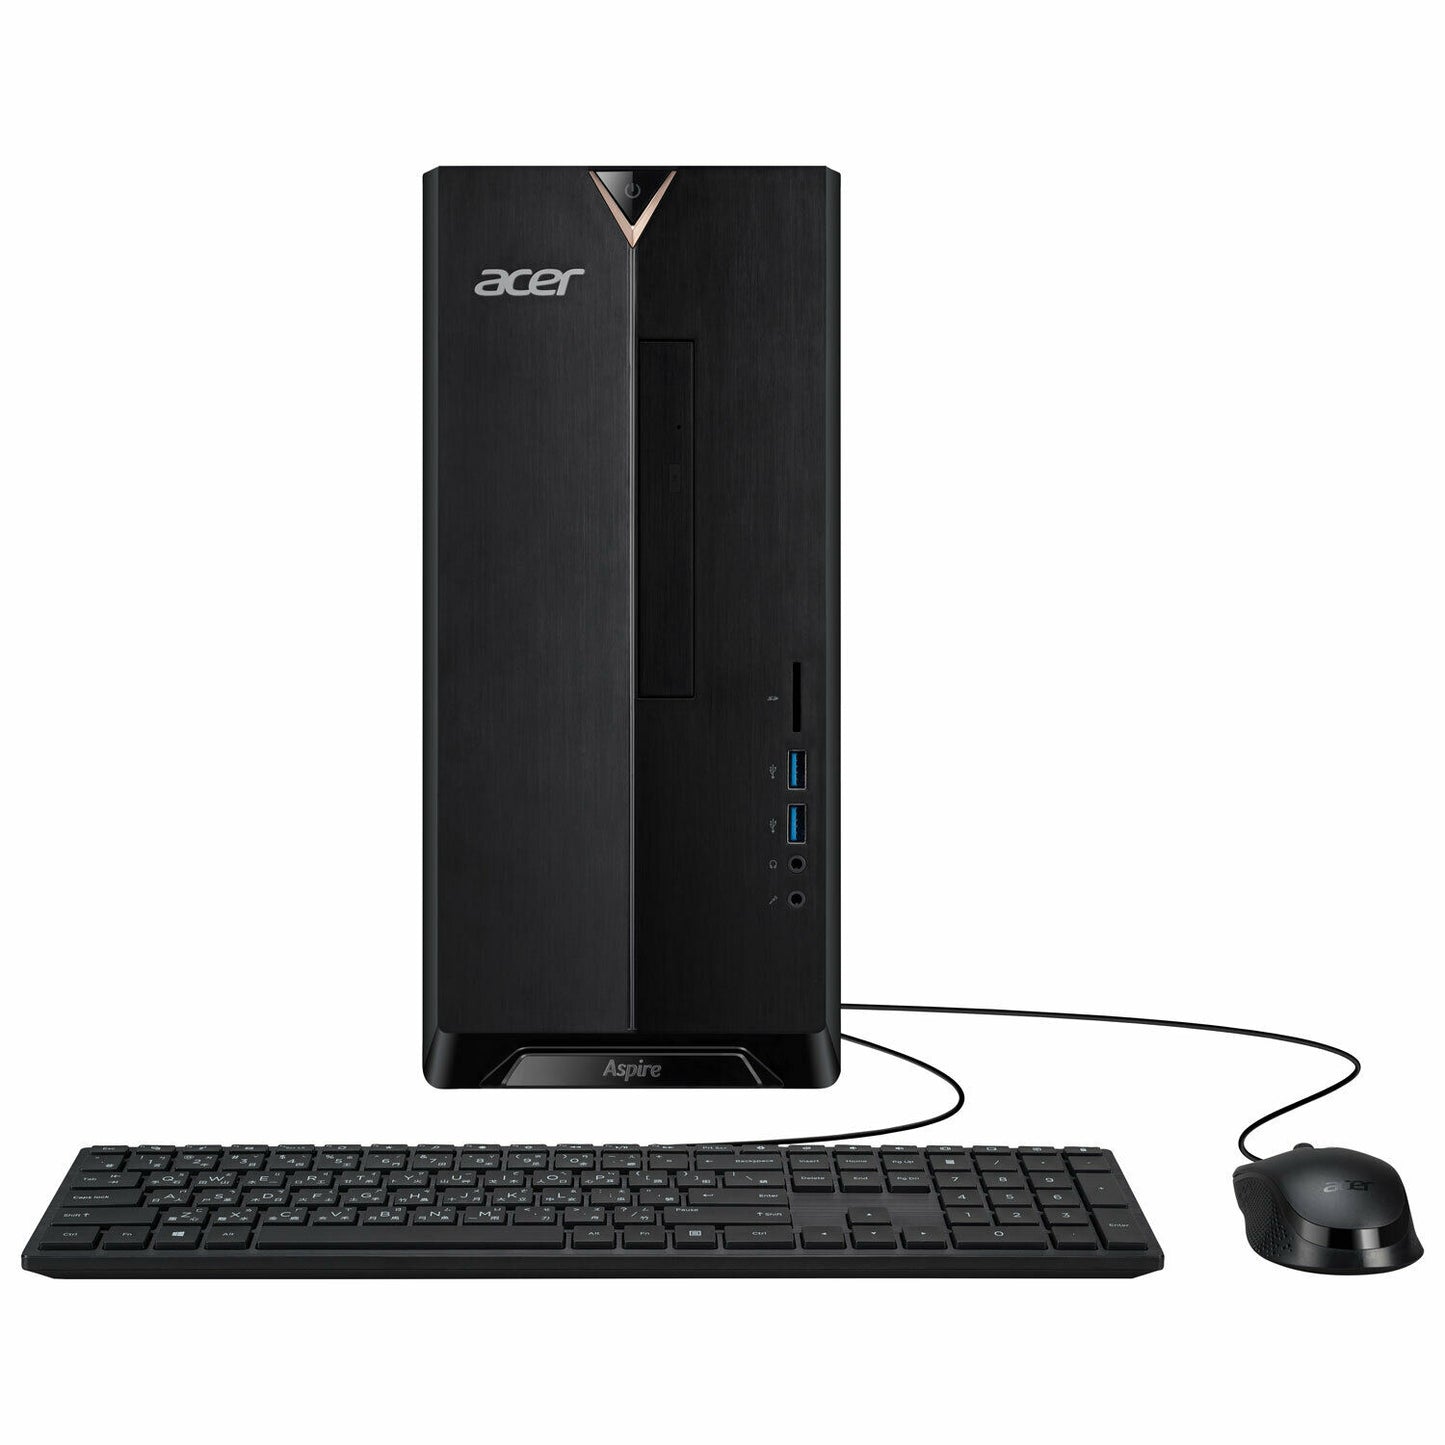 Acer Aspire Desktop PC AMD A6-9220 2.5GHz 8GB RAM 1TB HDD WiFi BT Win10 Home